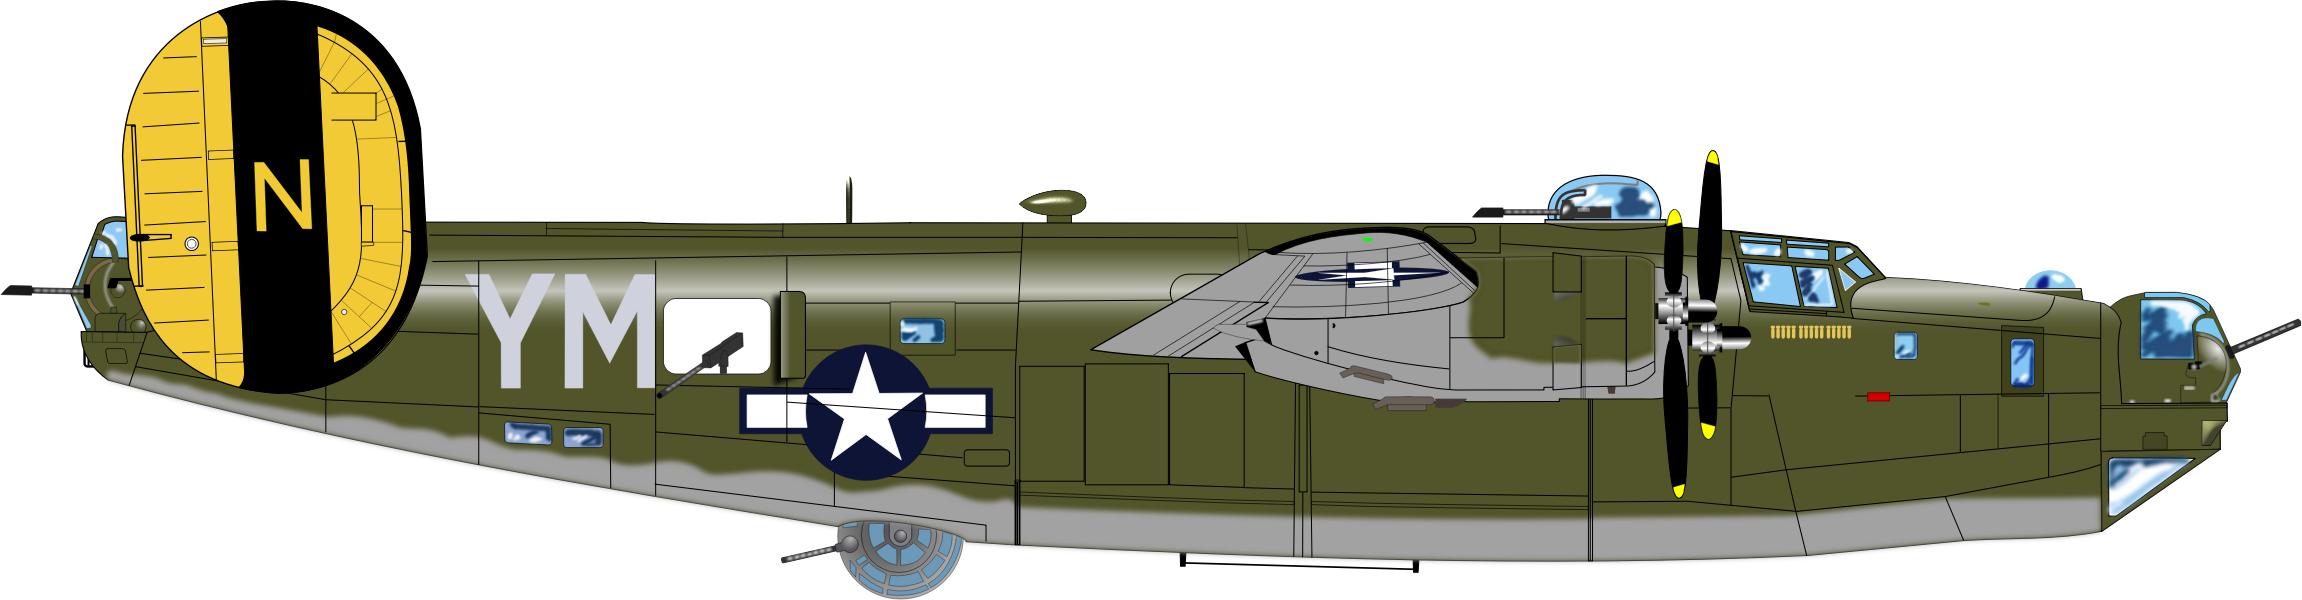 B-24 J BOMBER png